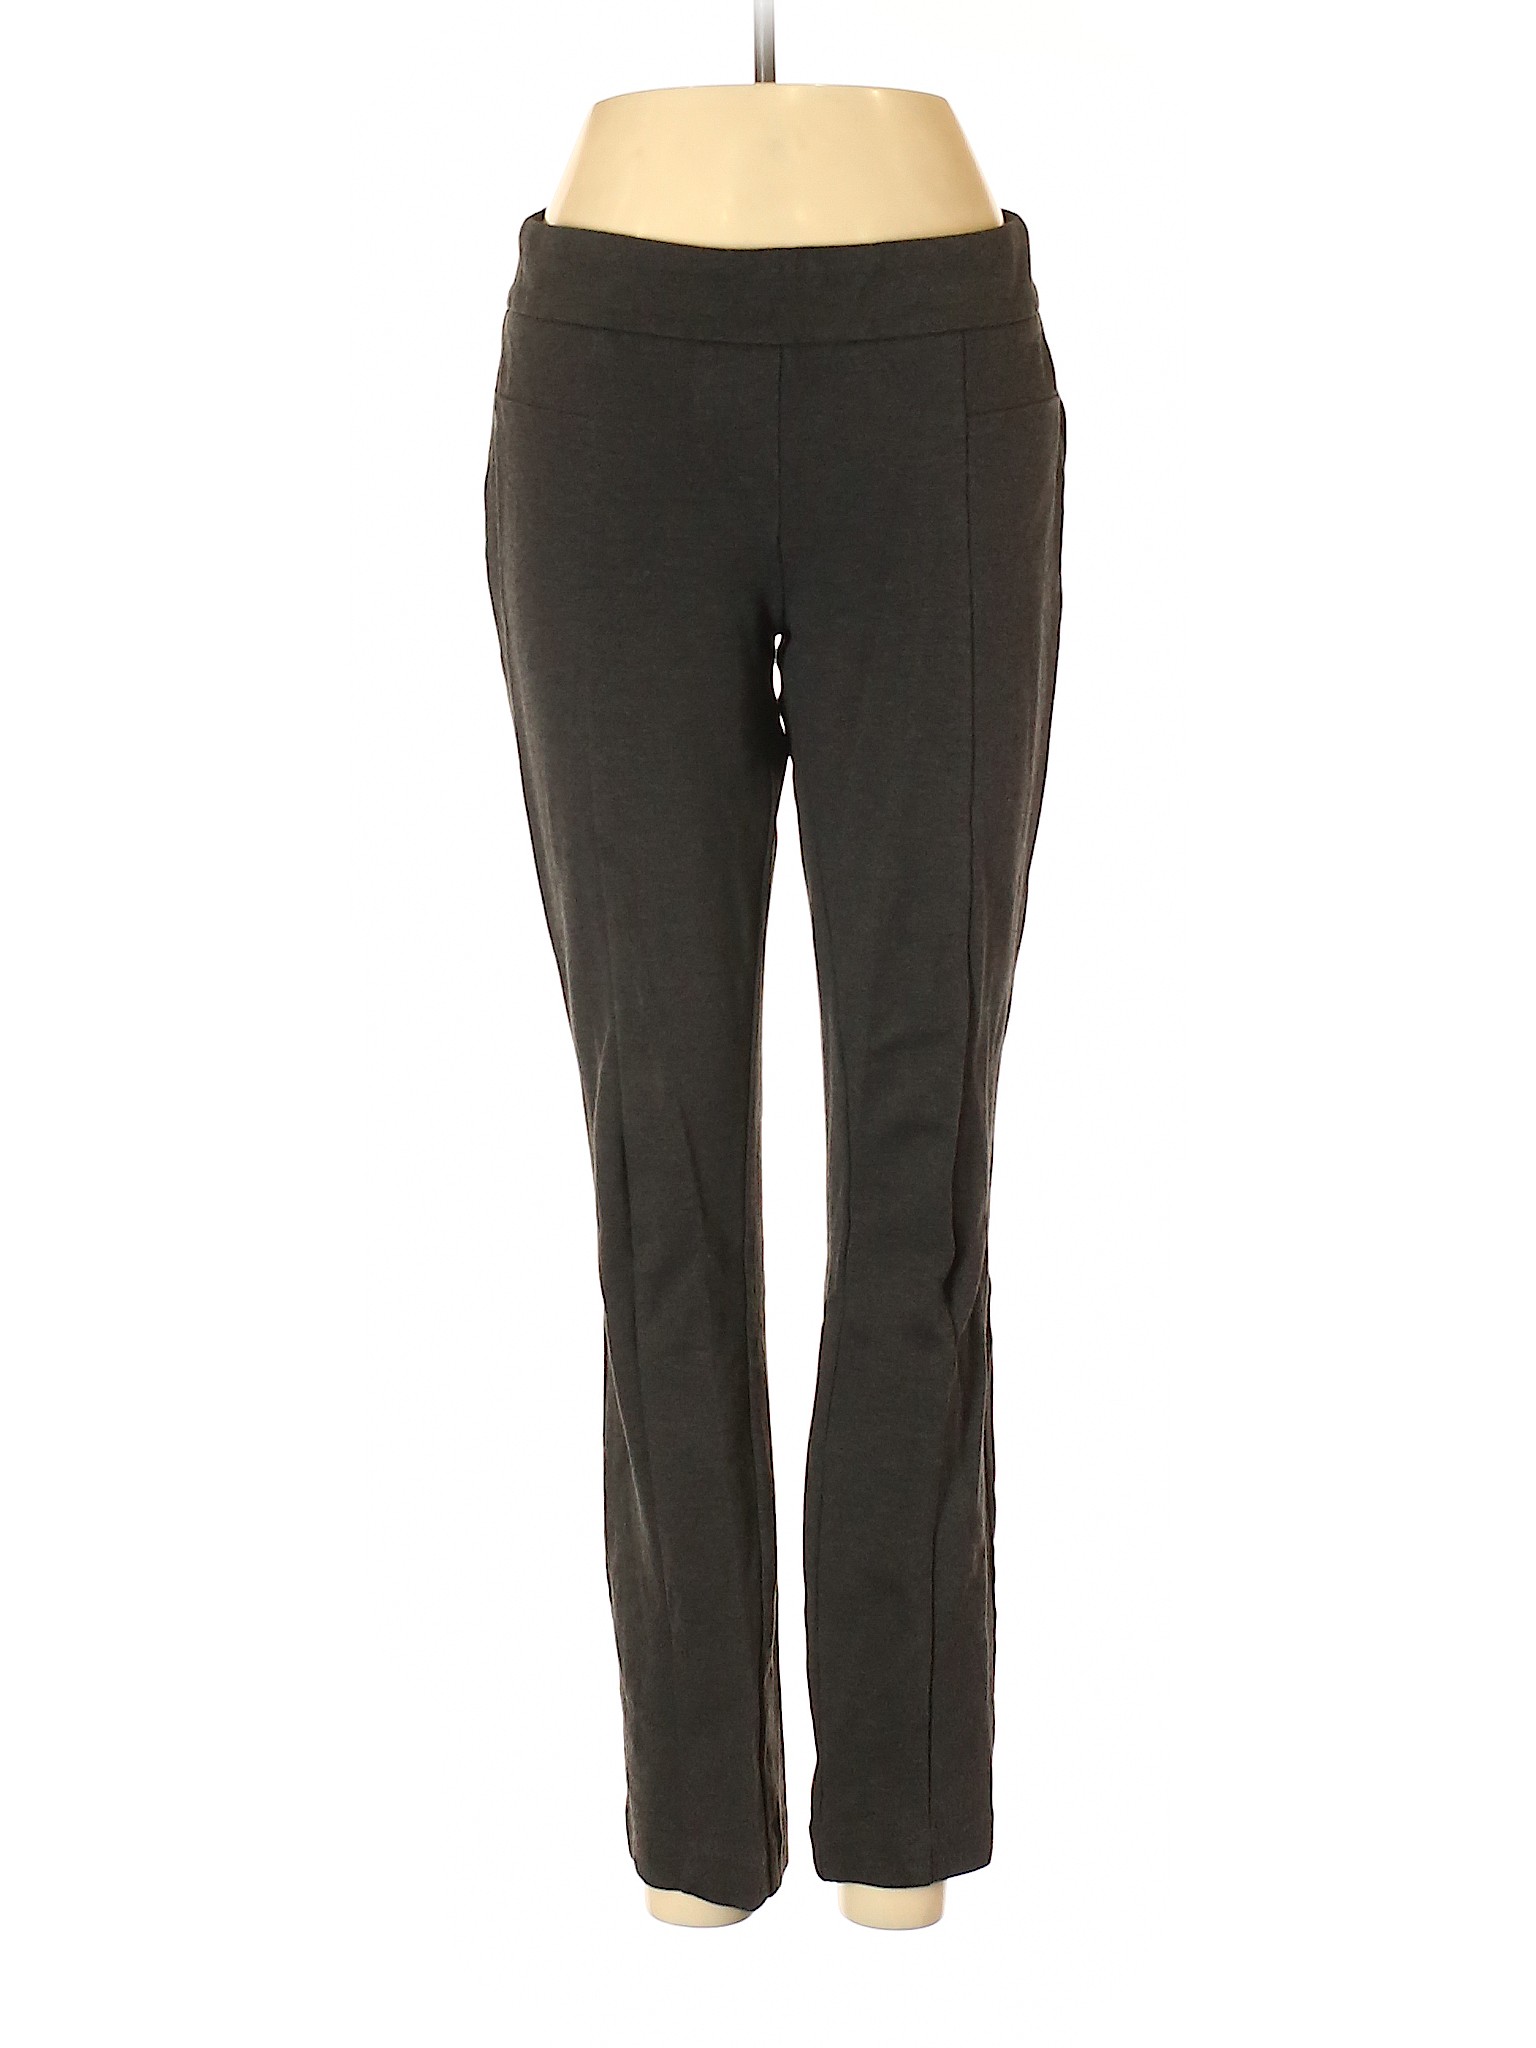 Hilary Radley Women Gray Casual Pants S | eBay